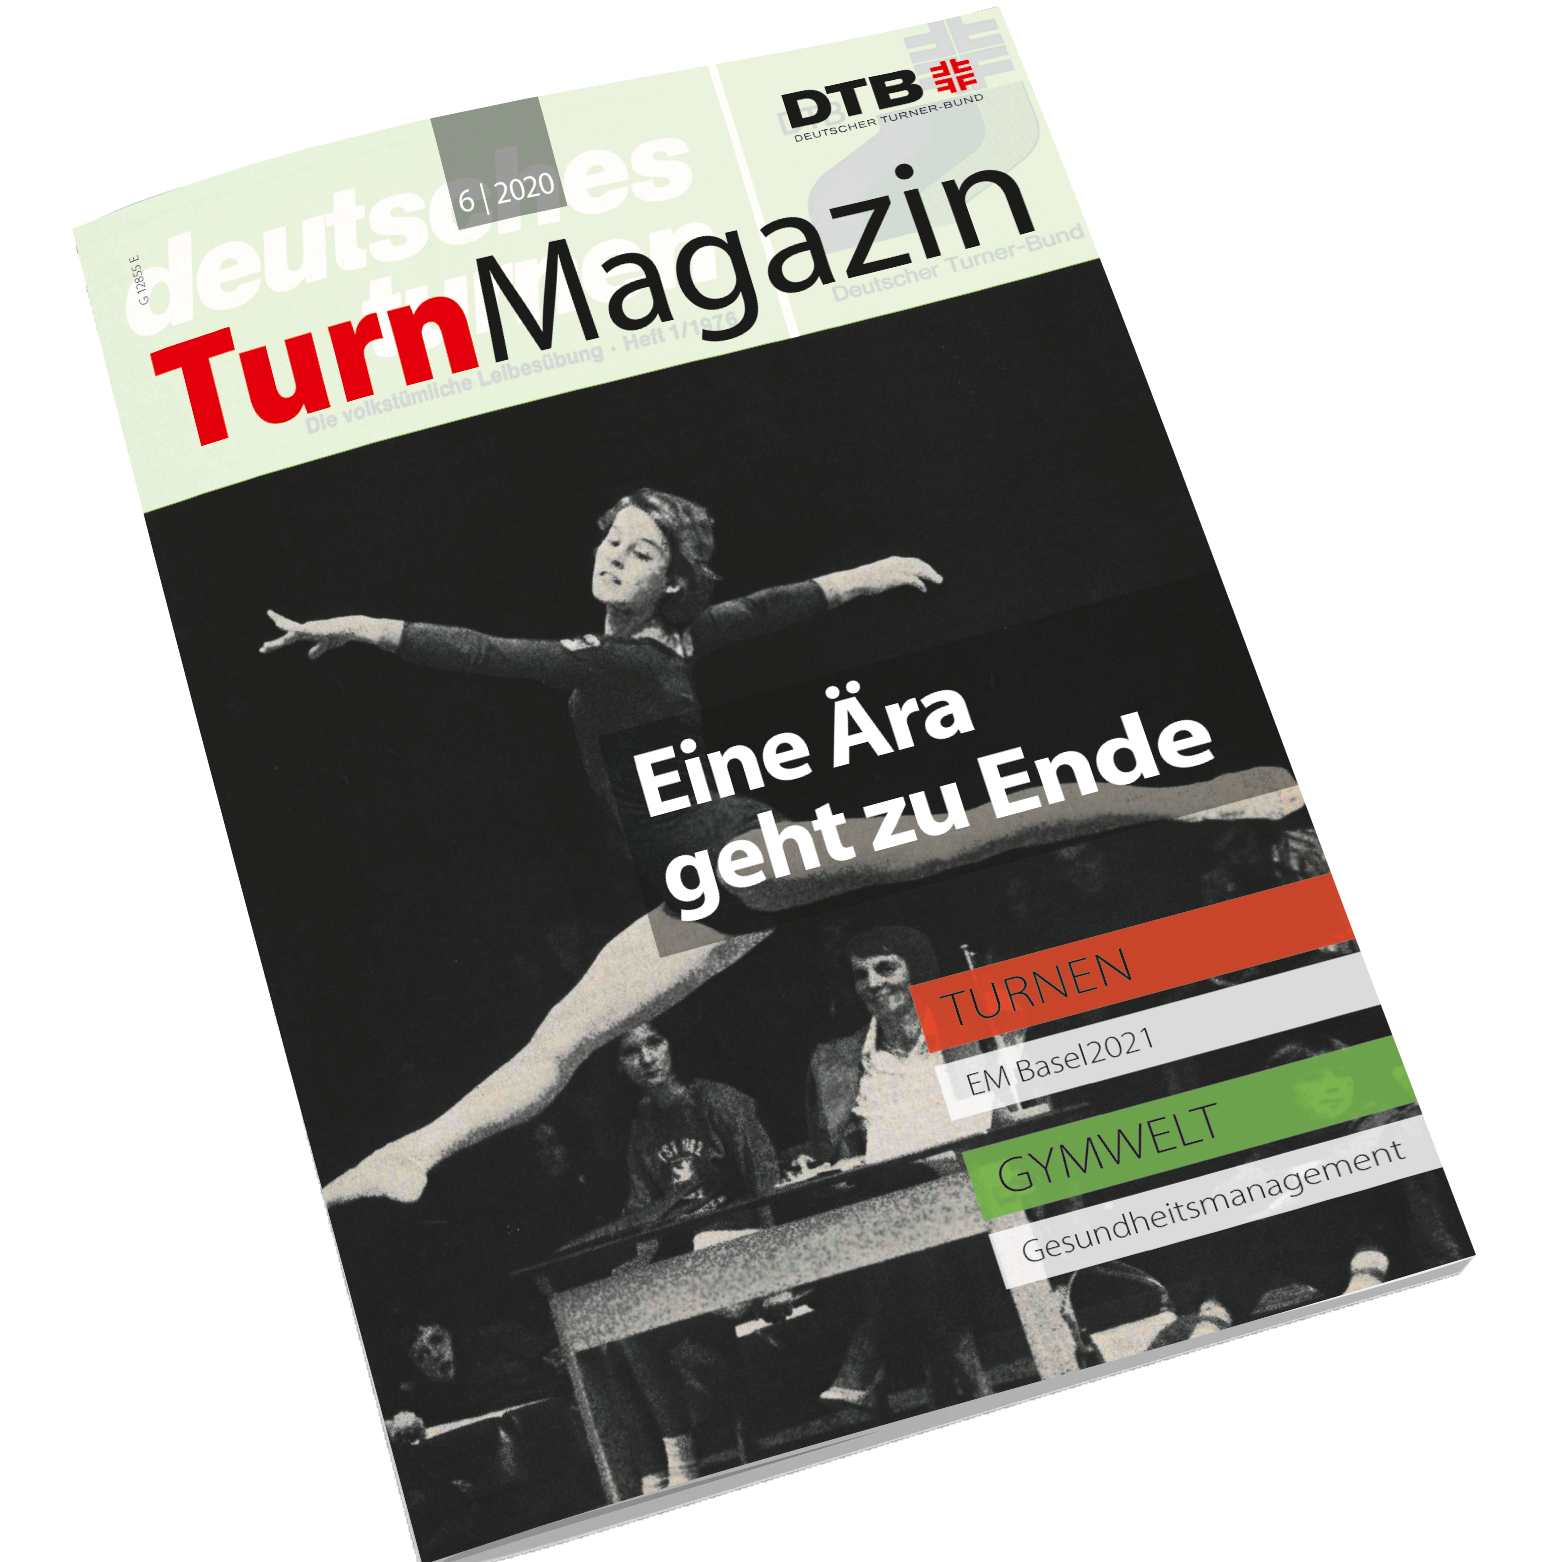 TurnMagazin 06/2020 | Bildquelle: DTB